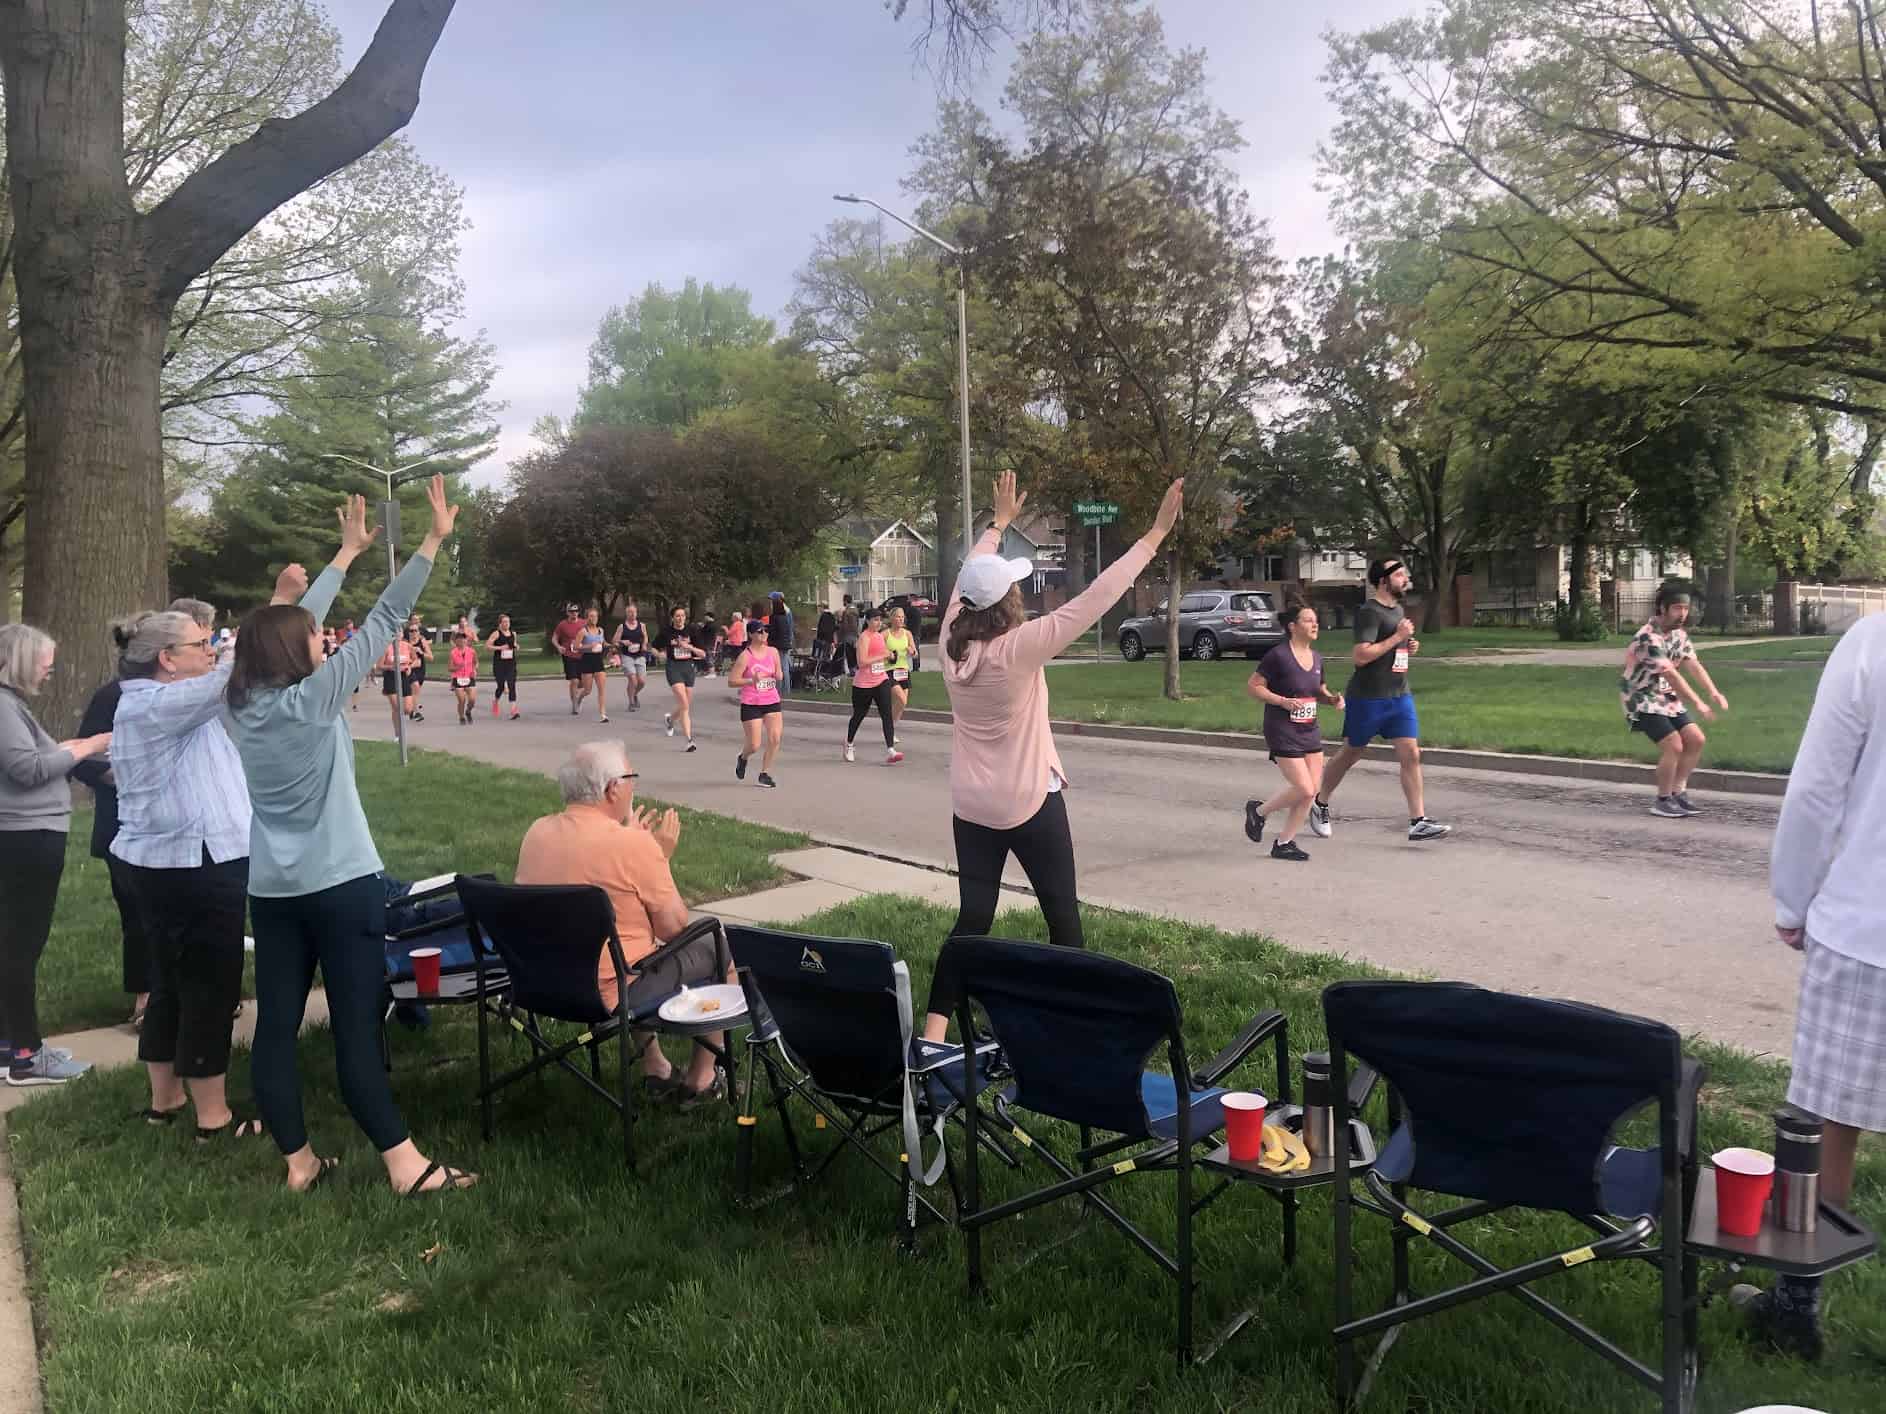 Best things to do in Lincoln Nebraska - Allea Grummert - Cheering on runners at the Lincoln Marathon